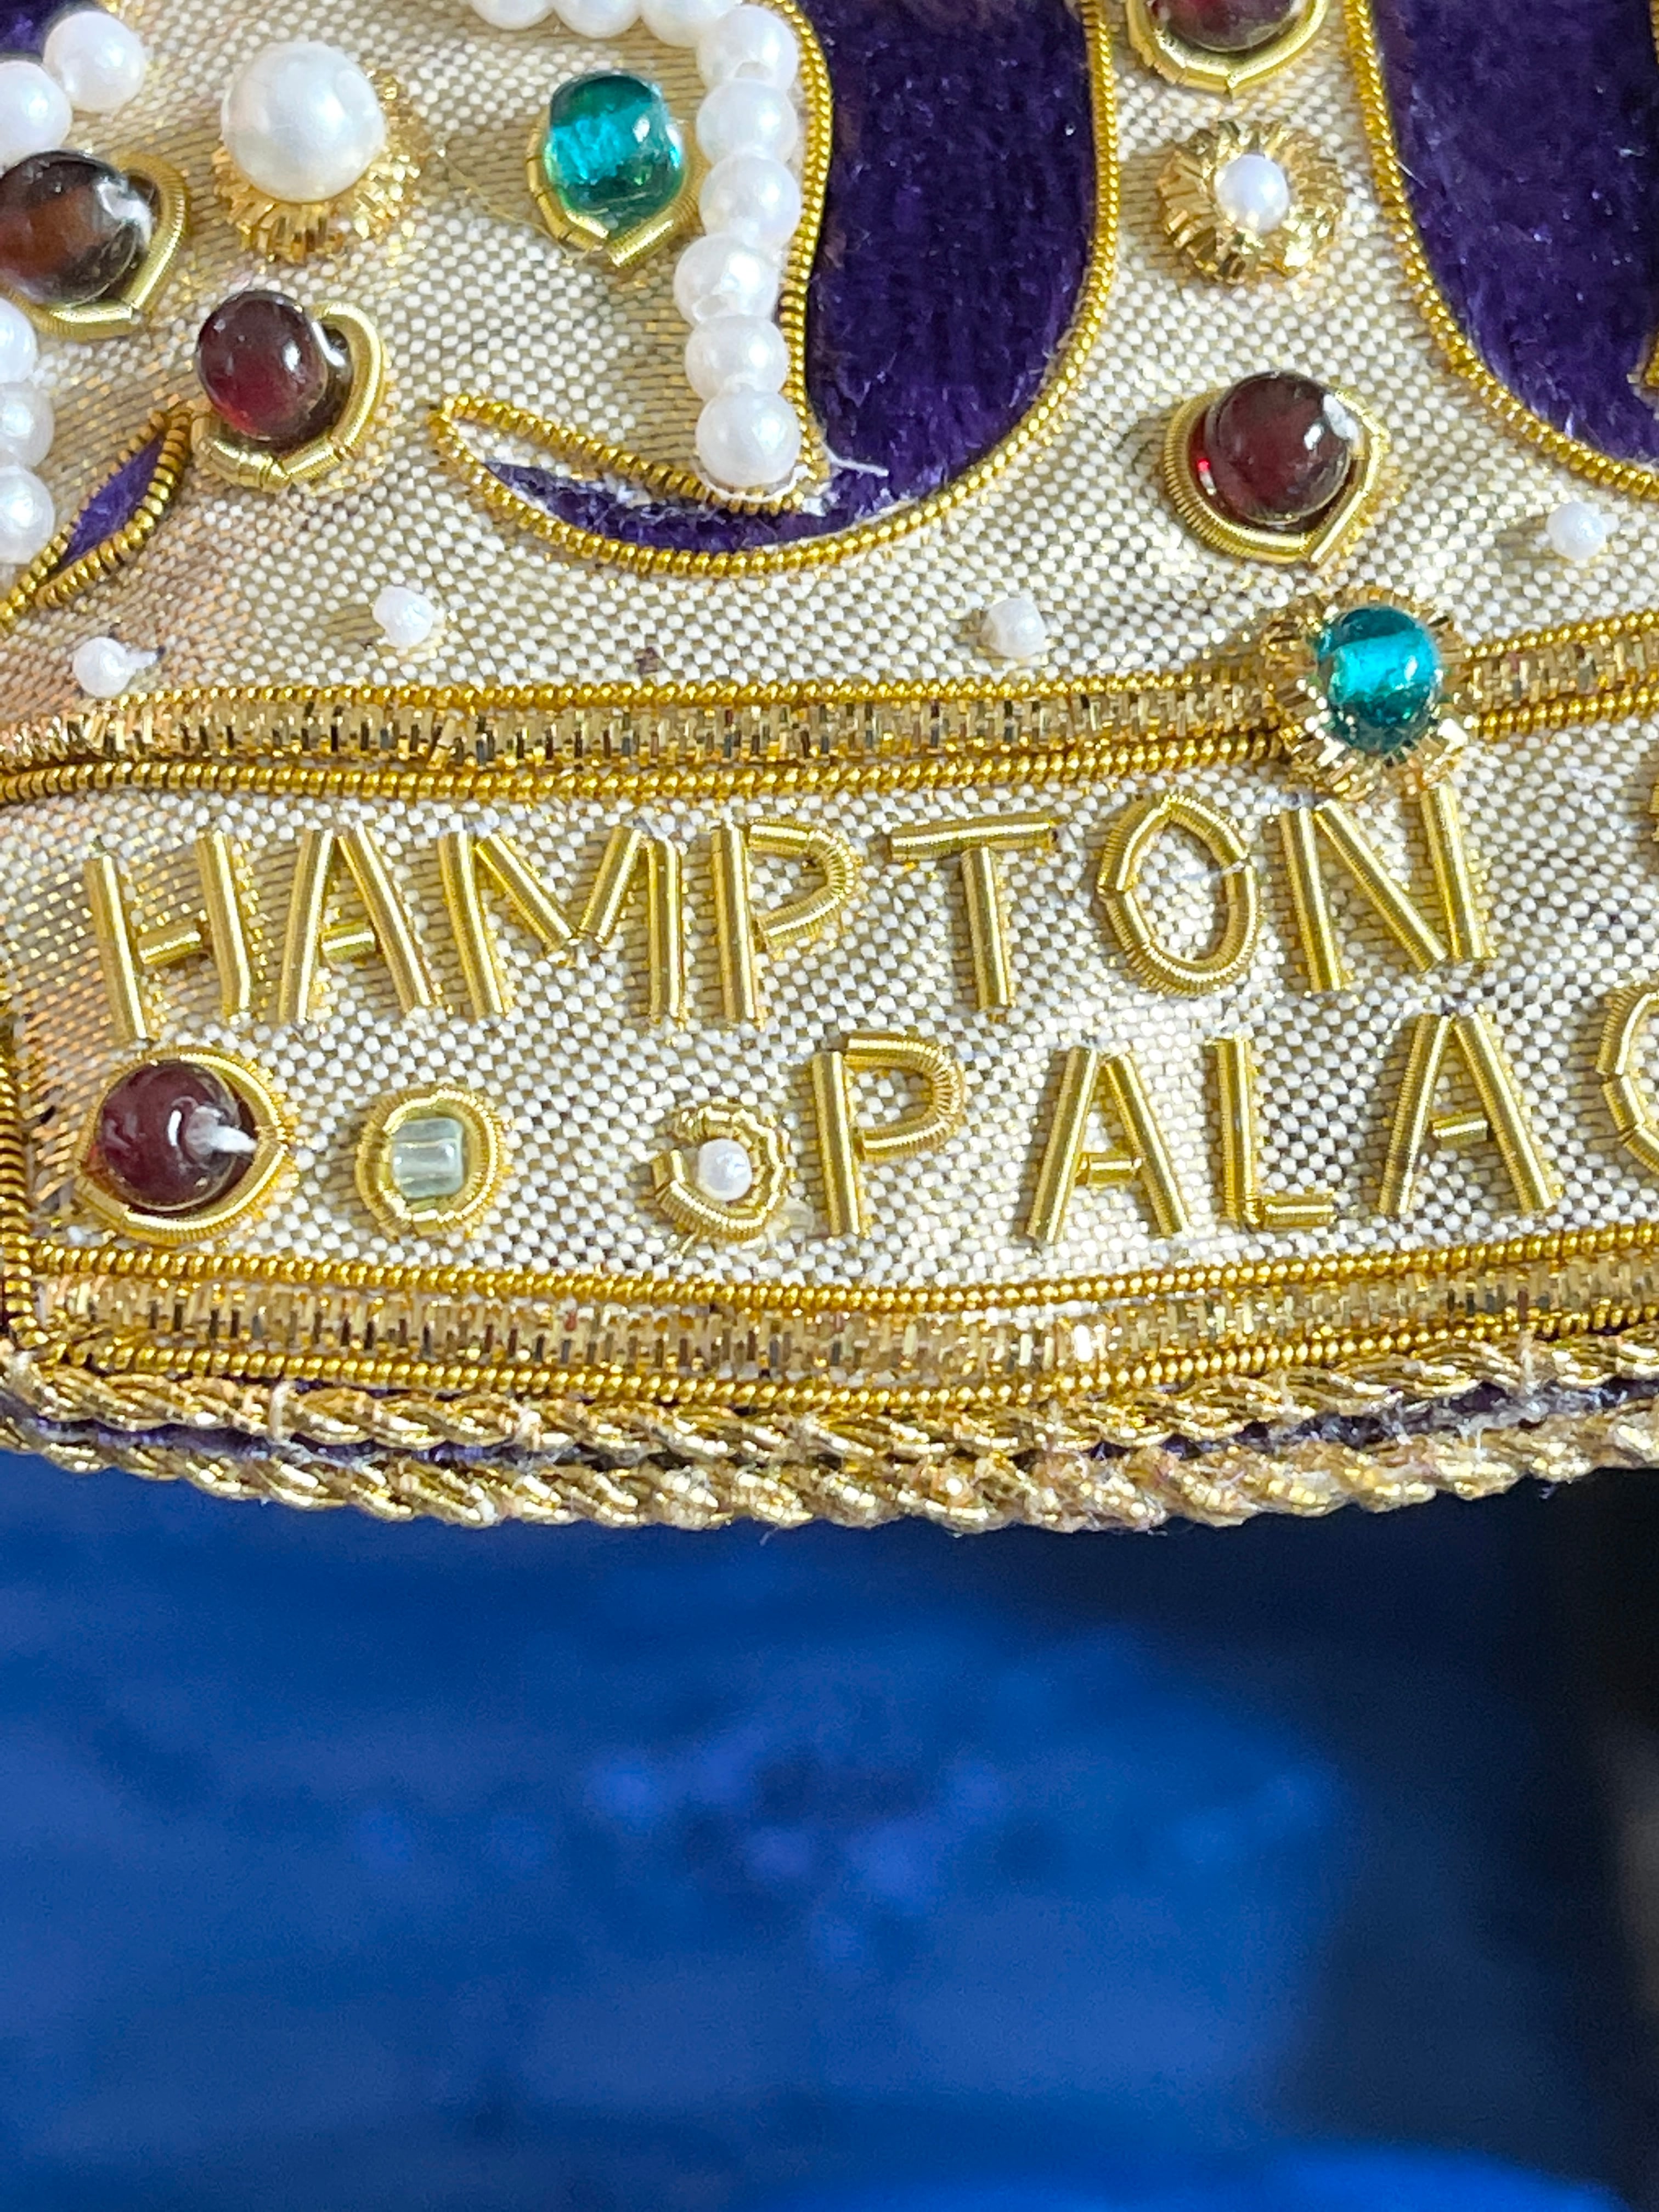 ３０％ＯＦＦ！『Royal Palace』ハンプトン コート宮殿の王冠 オーナメント Hampton Court Palace crown decoration